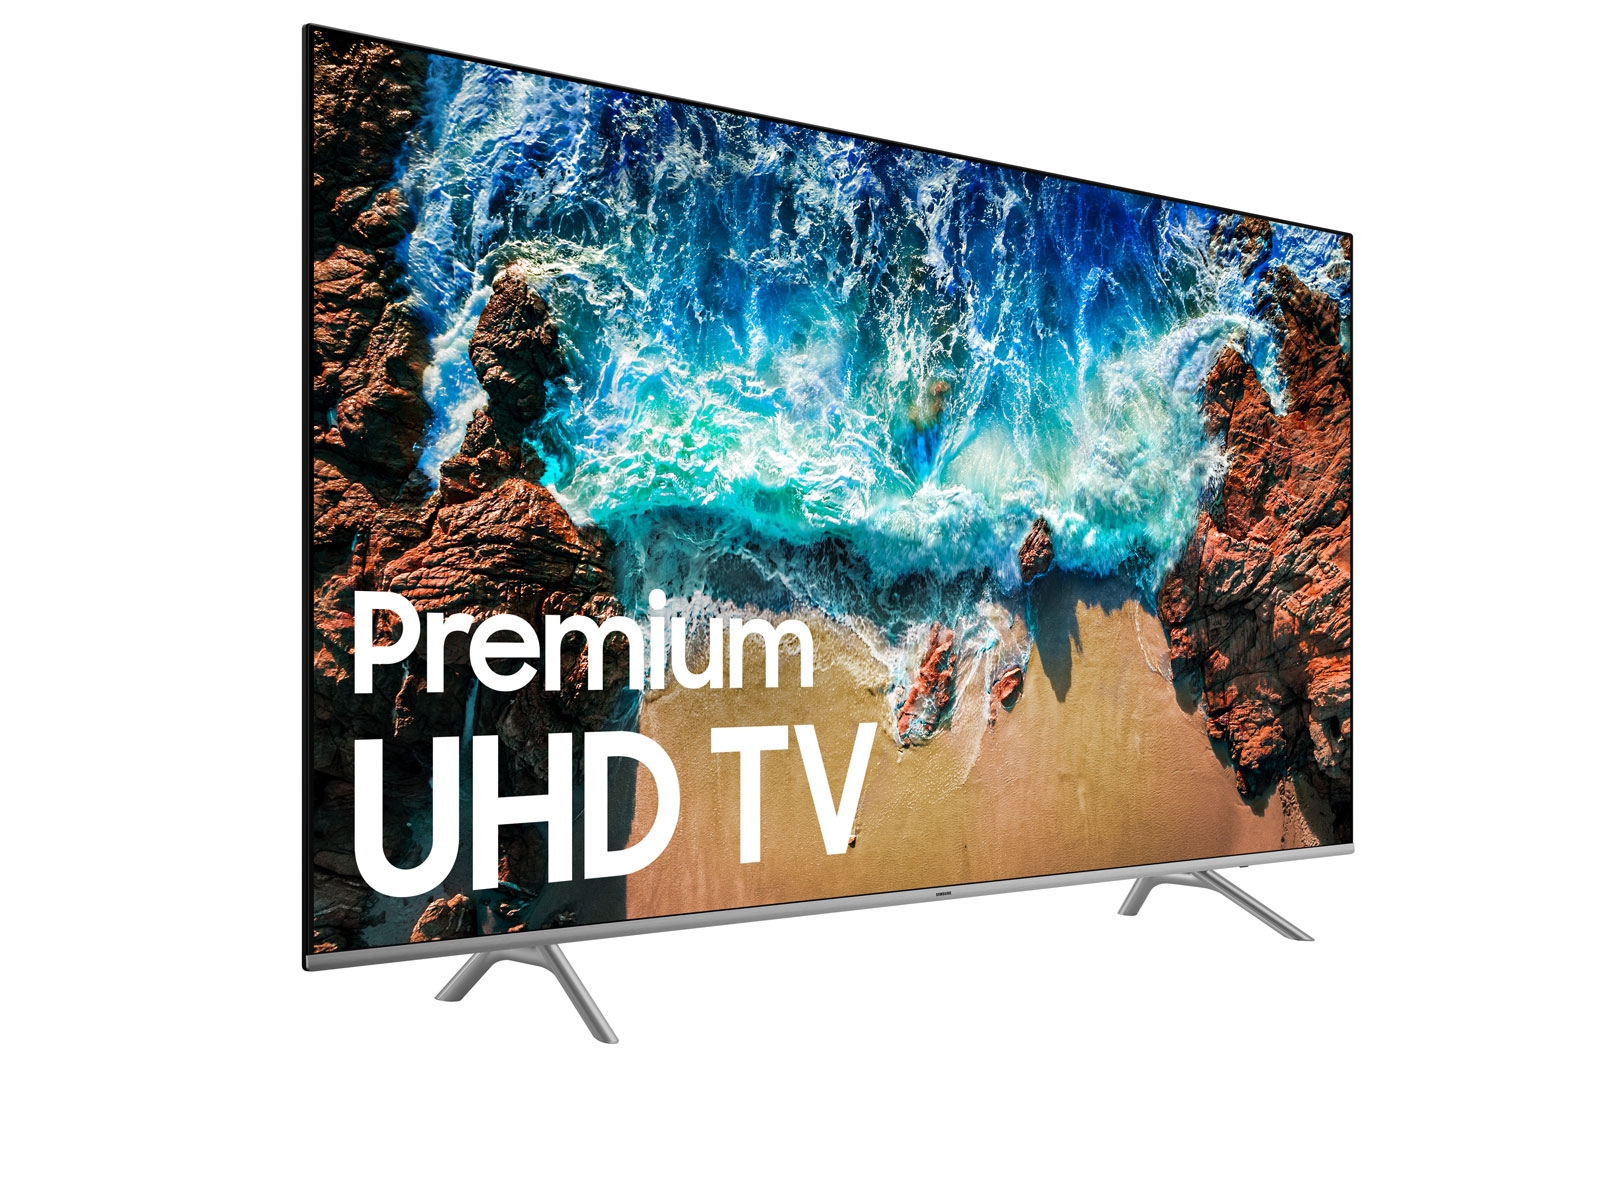 Thumbnail image of 82” Class NU8000 Premium Smart 4K UHD TV